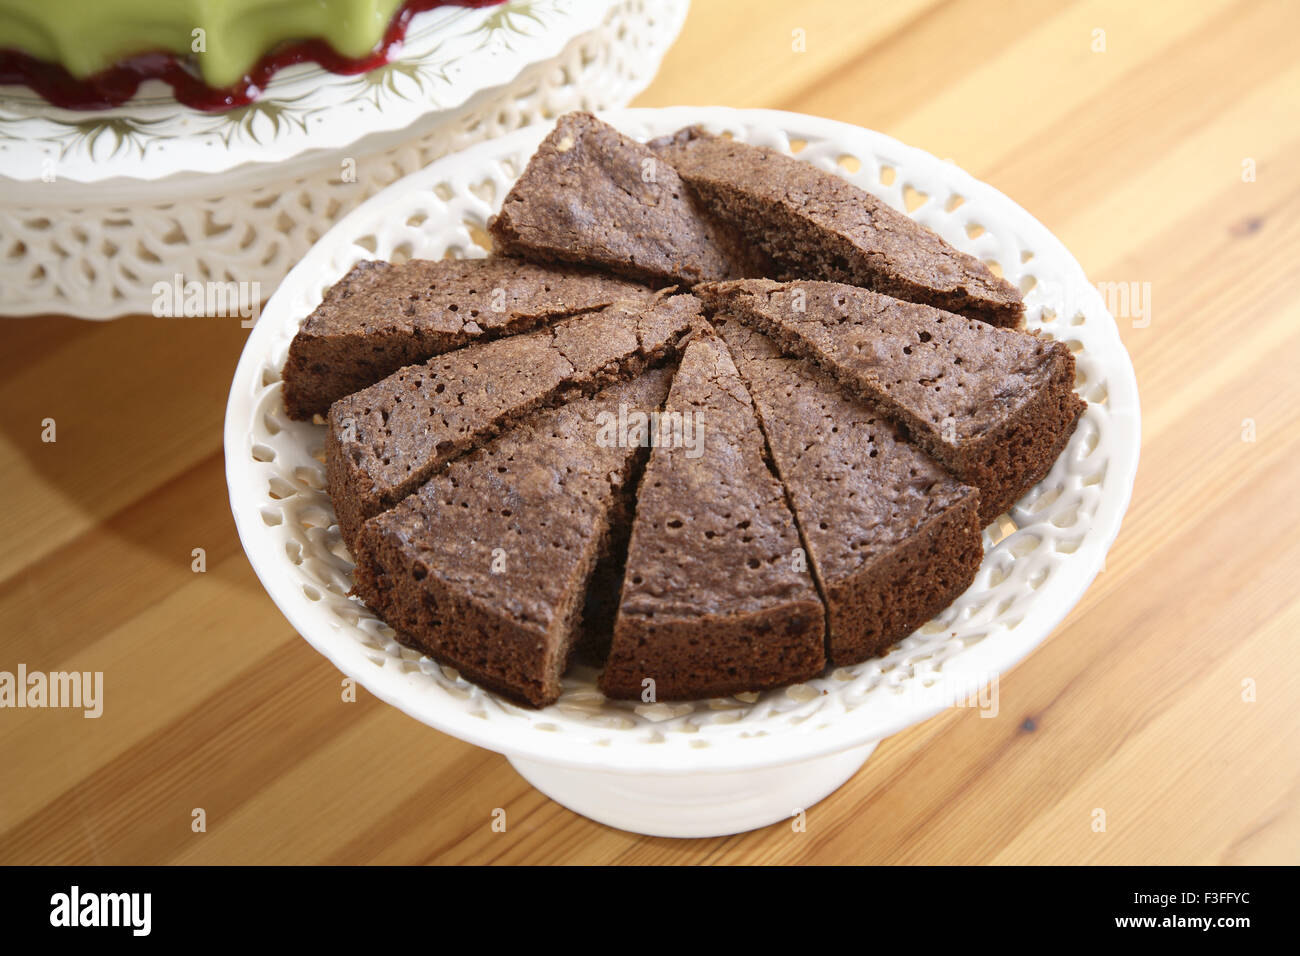 Dessert ; round chocolate cake cut into triangular pieces Stock Photo